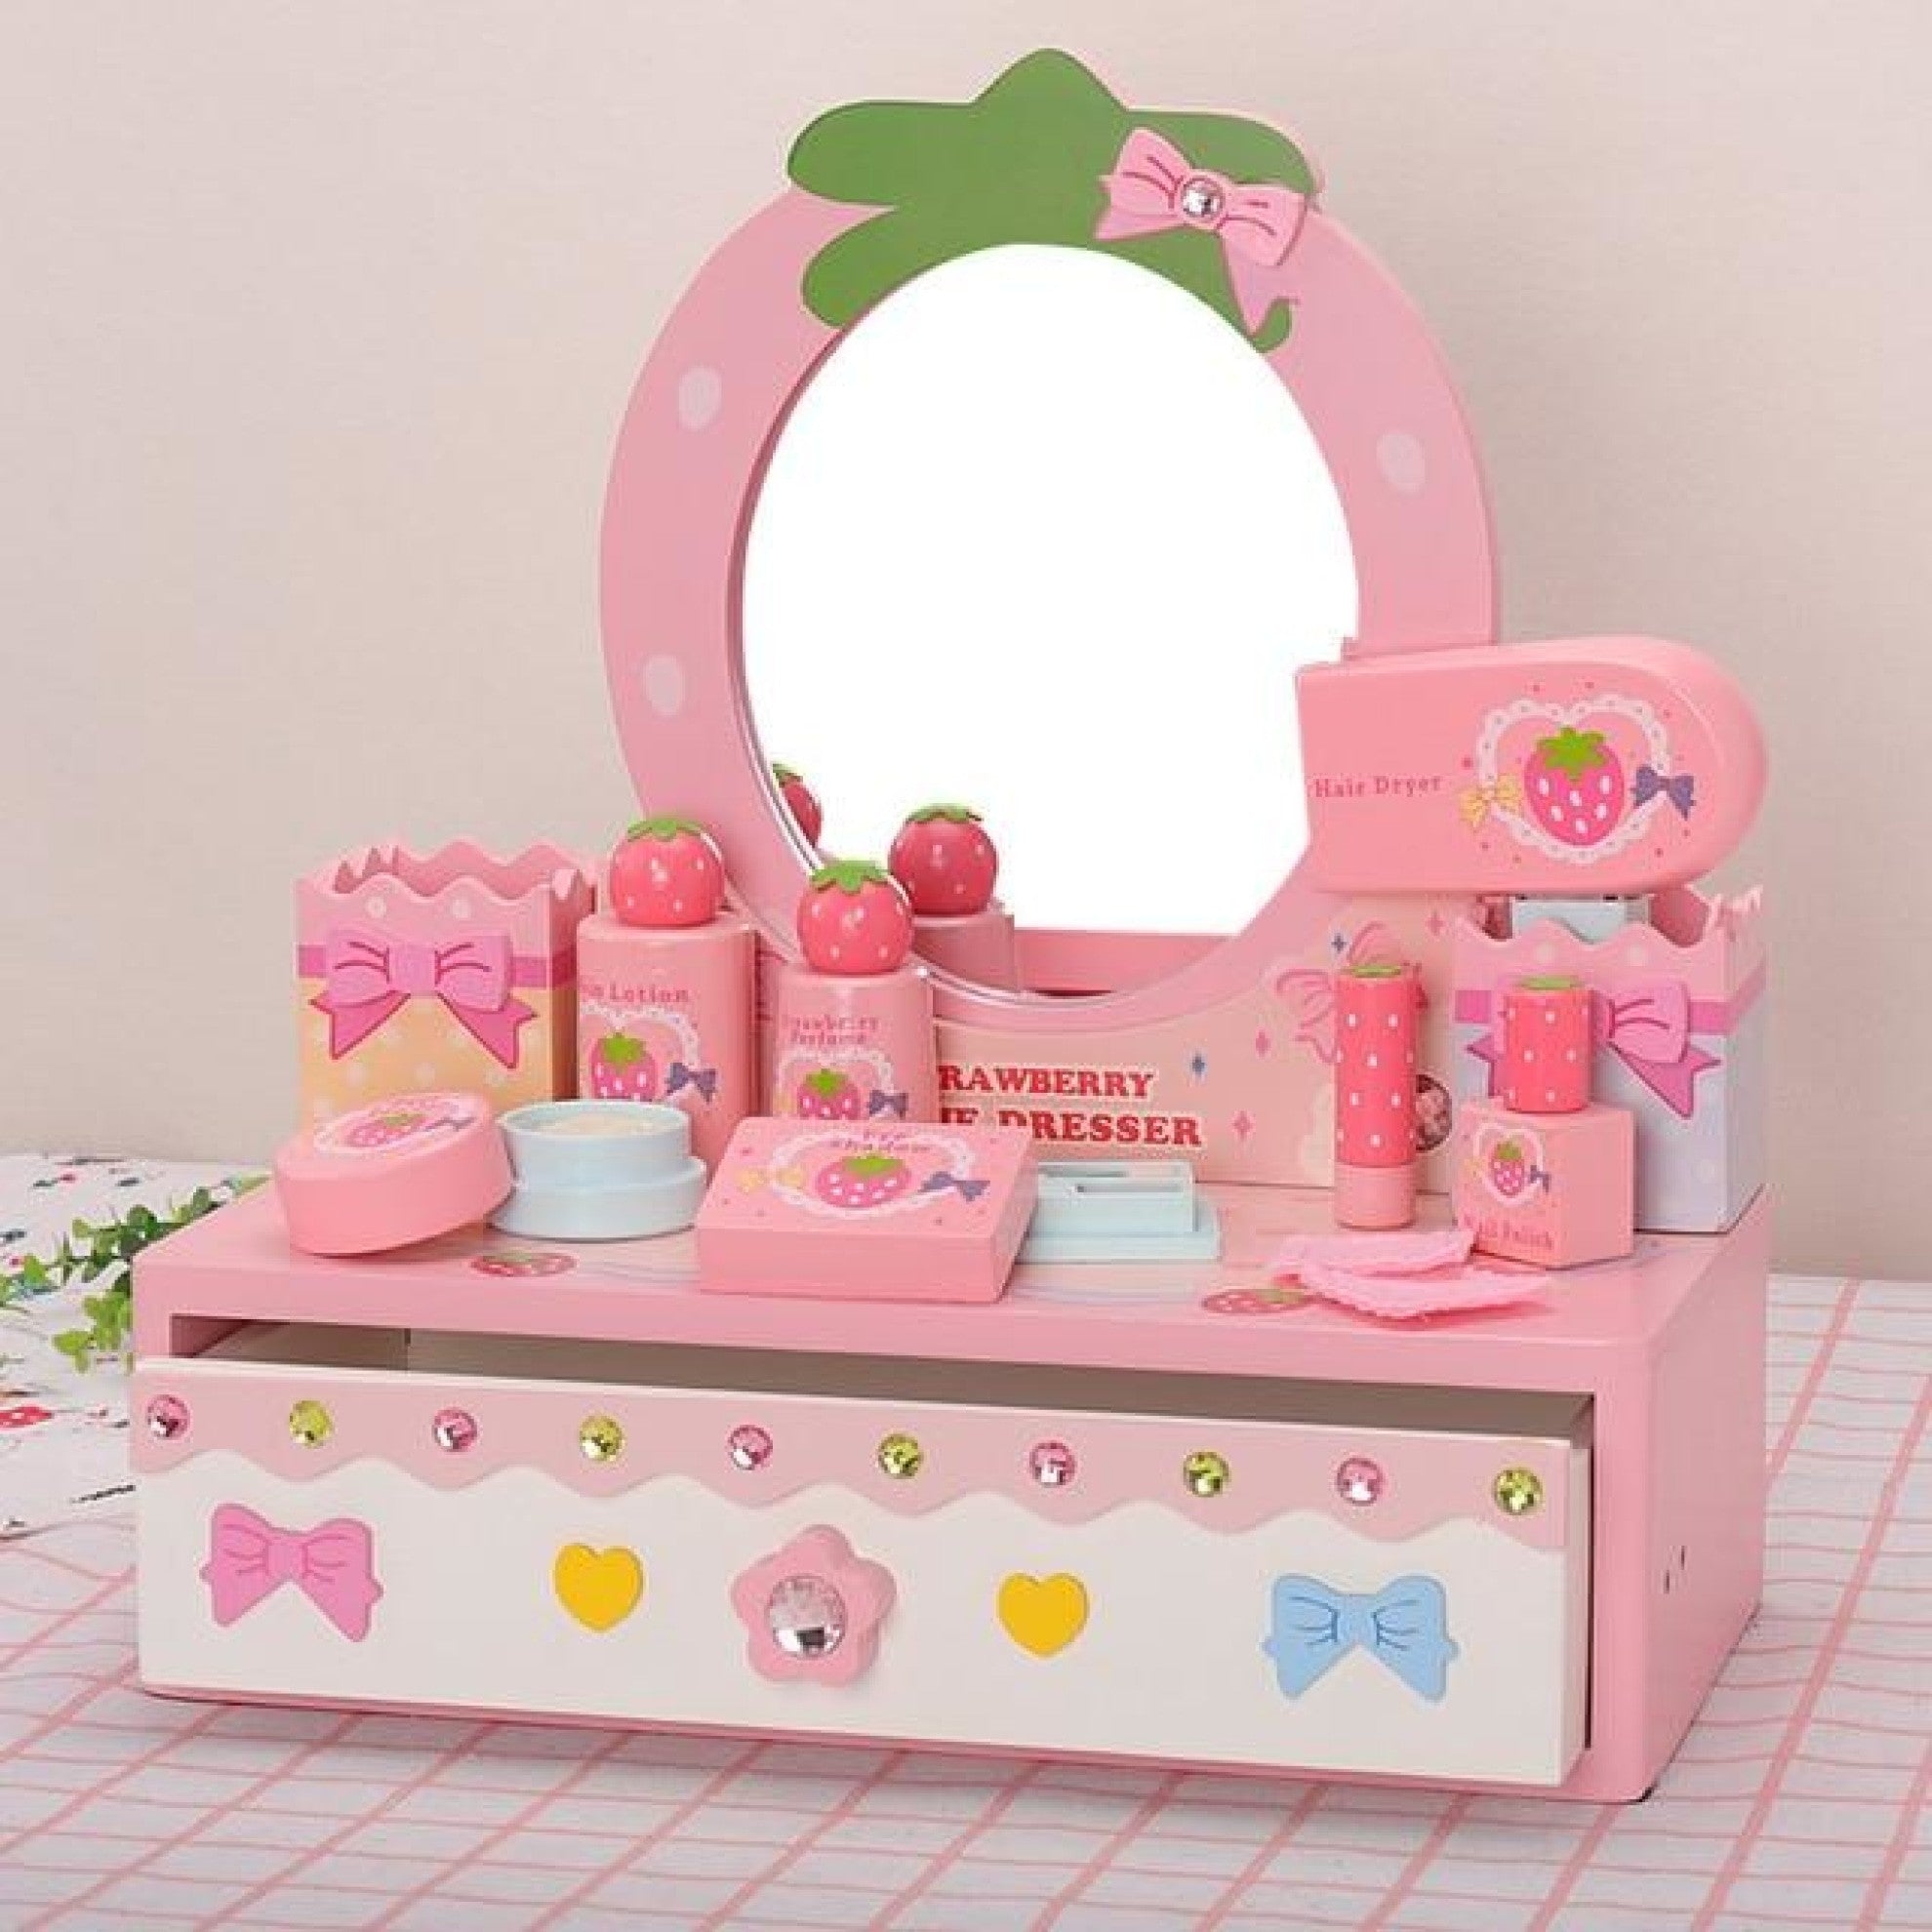 Royal Princess Pink Wooden Dresser Toy With Make Up Set My Aashis